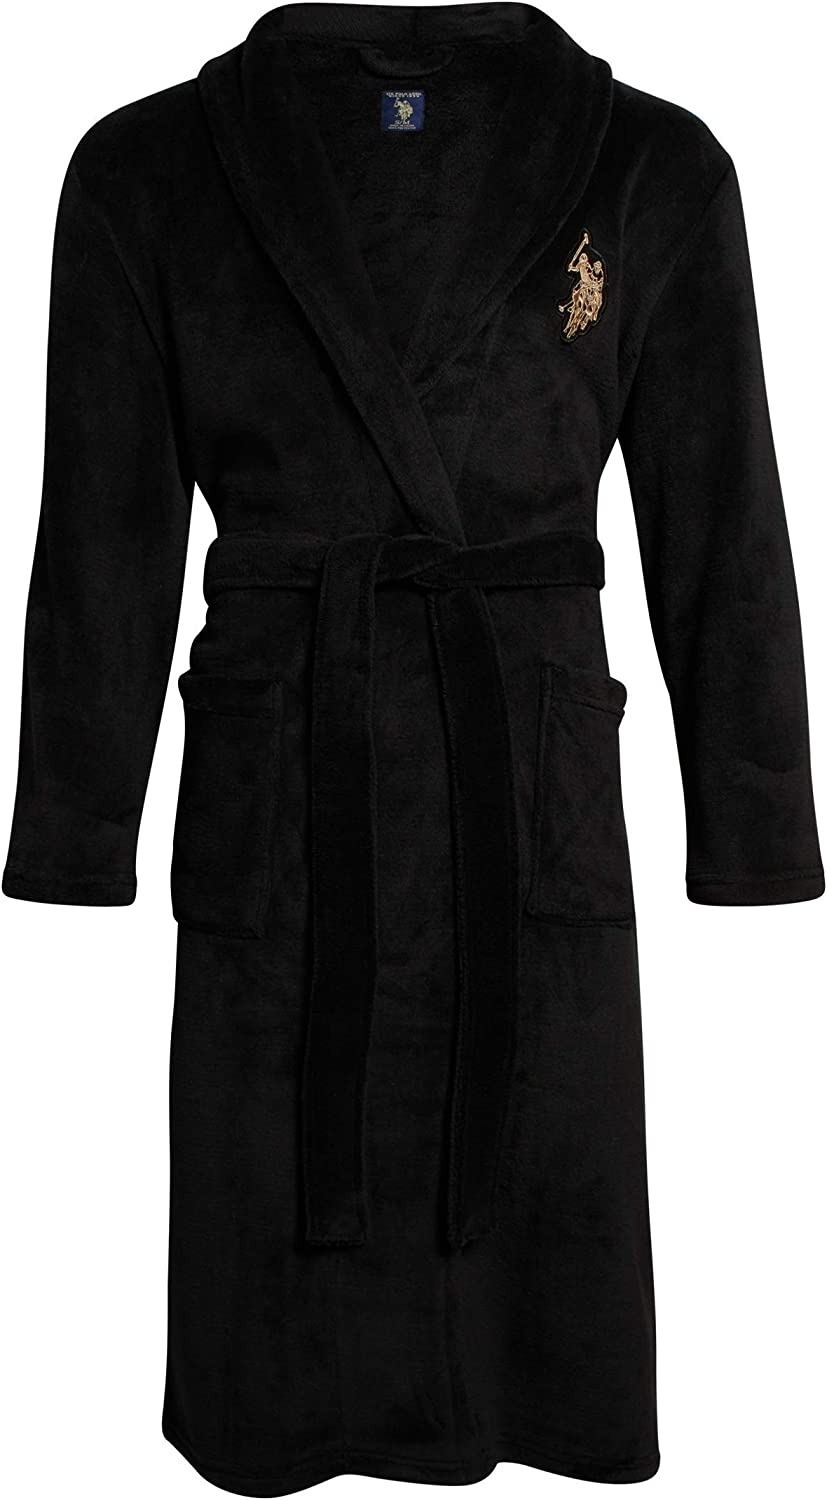 U.S. Polo Assn. Men's Plush Fleece Bathrobe w/ Shawl Collar (Sizes S-XL, Various Colors) $25 + Free Shipping w/ Prime or $25+ orders